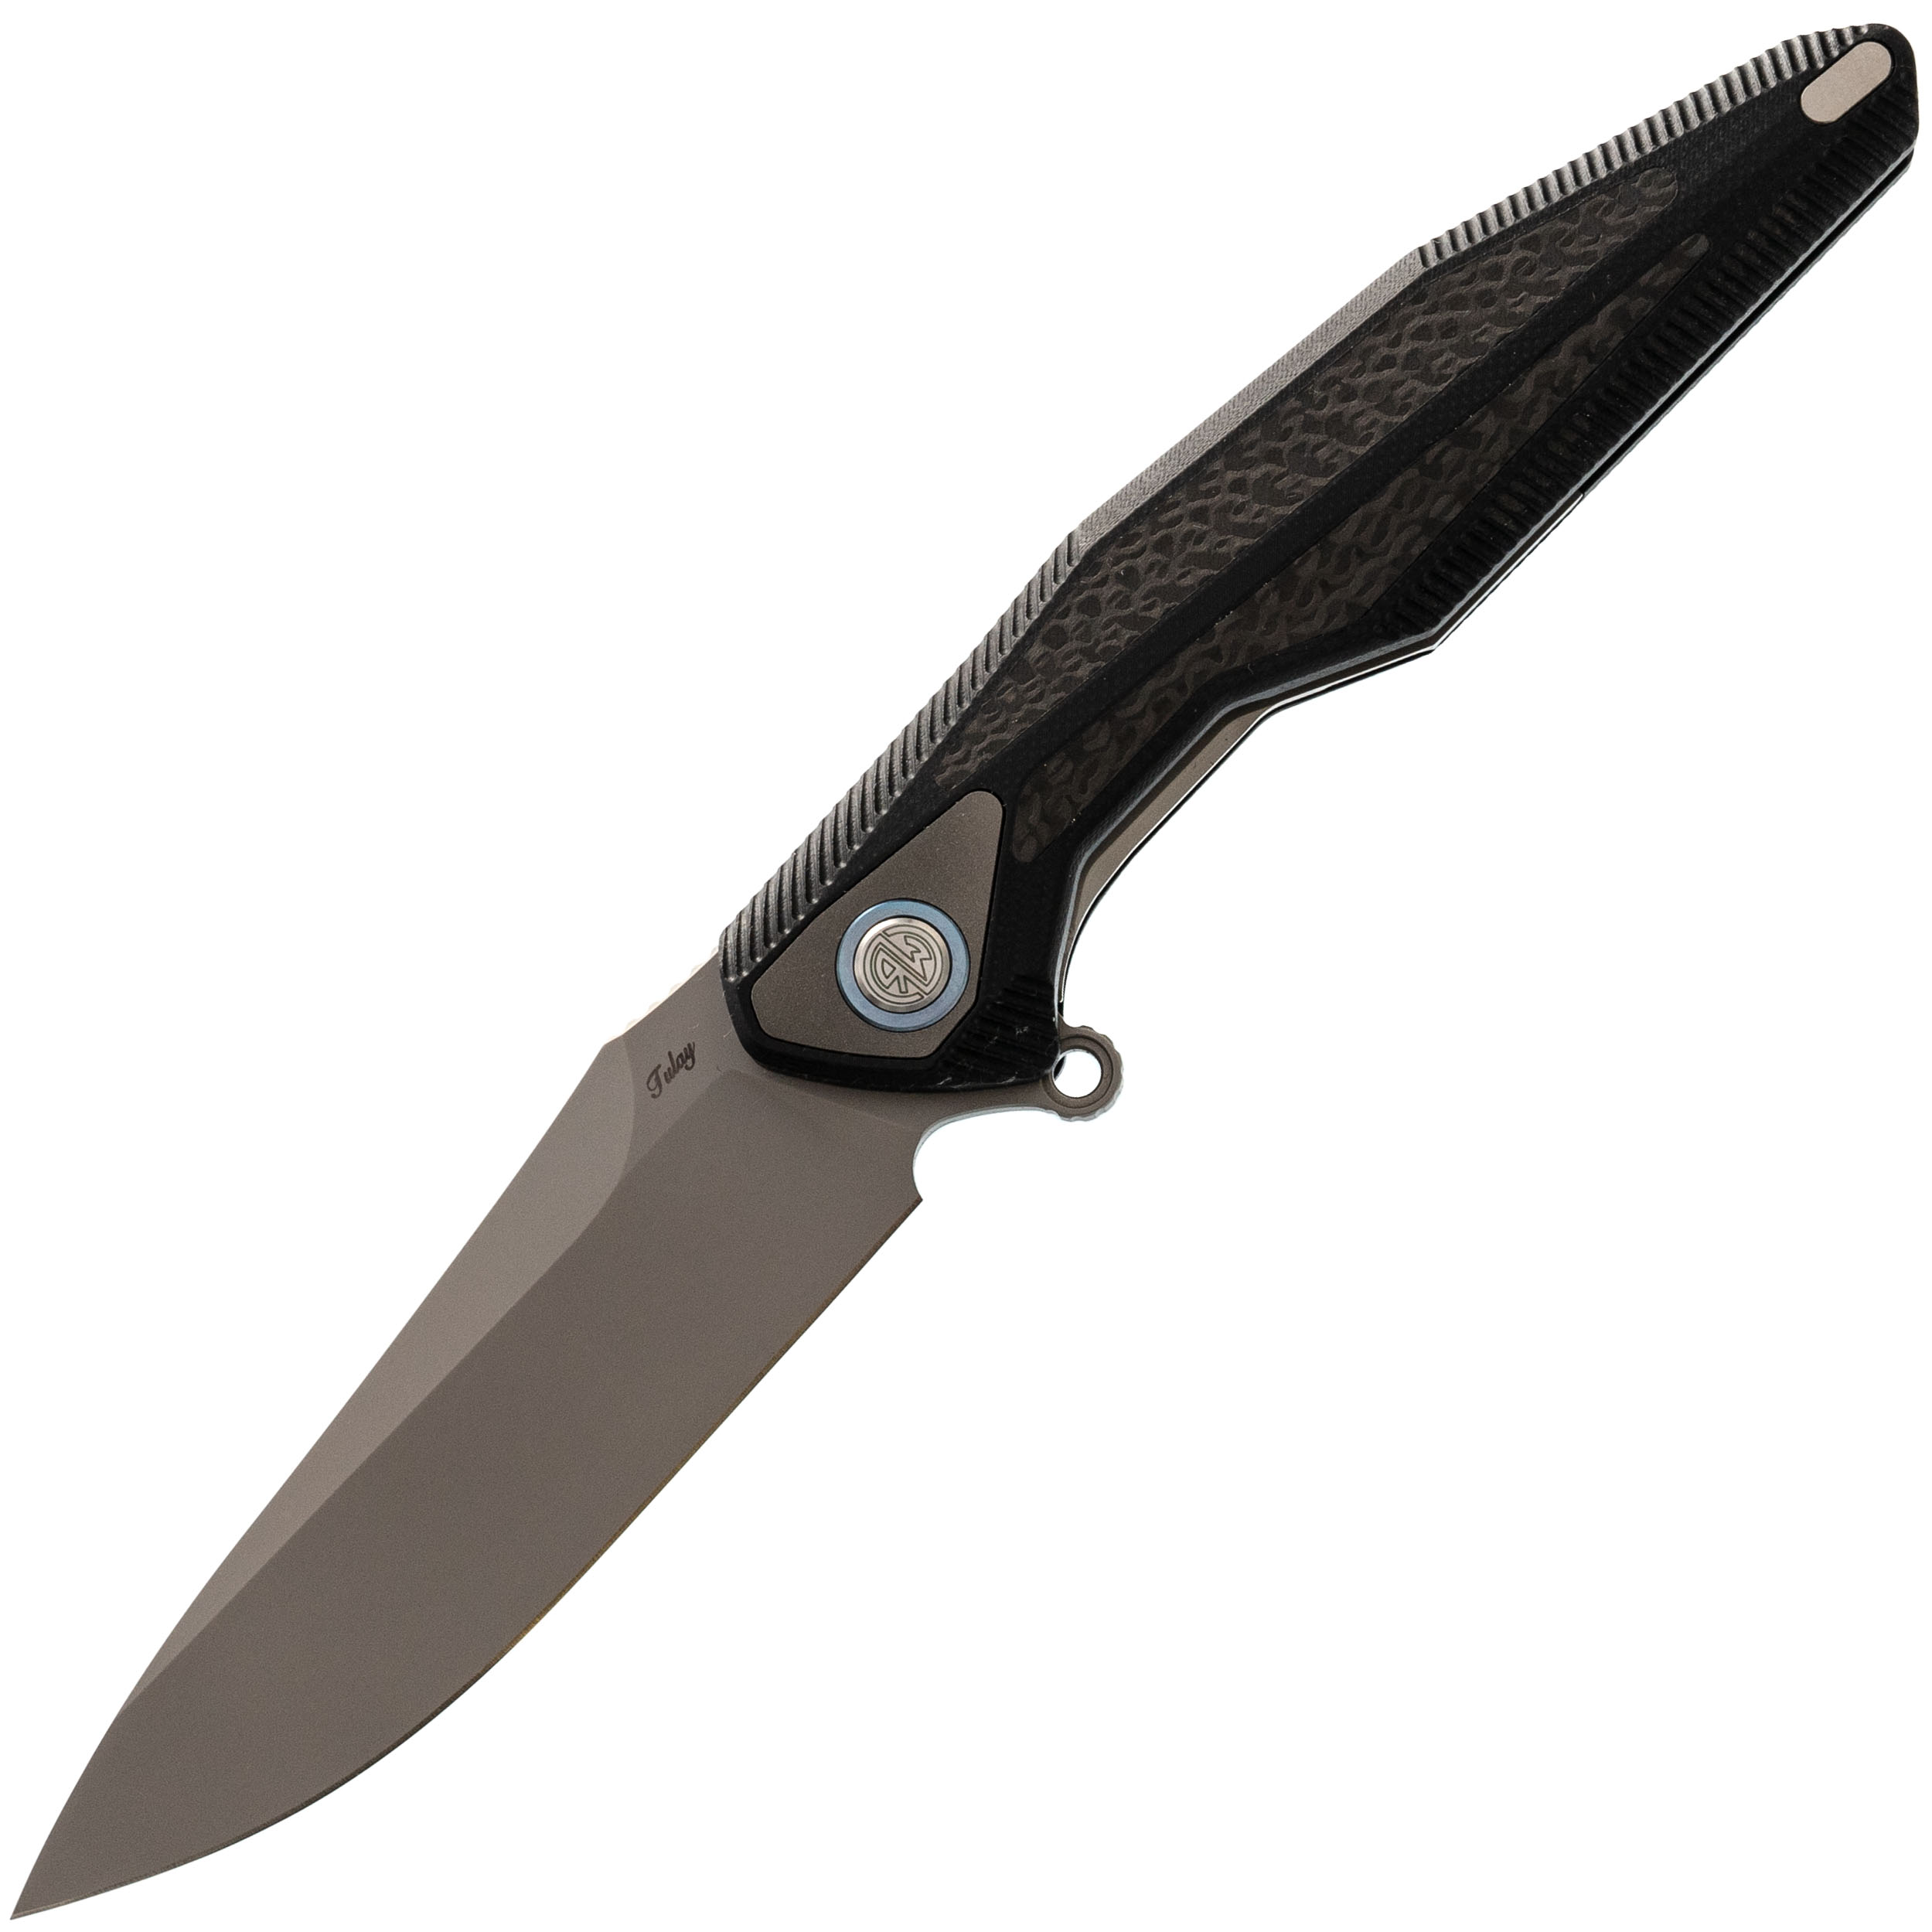   Tulay Rikeknife,  154CM, Black G10/Carbon Fiber